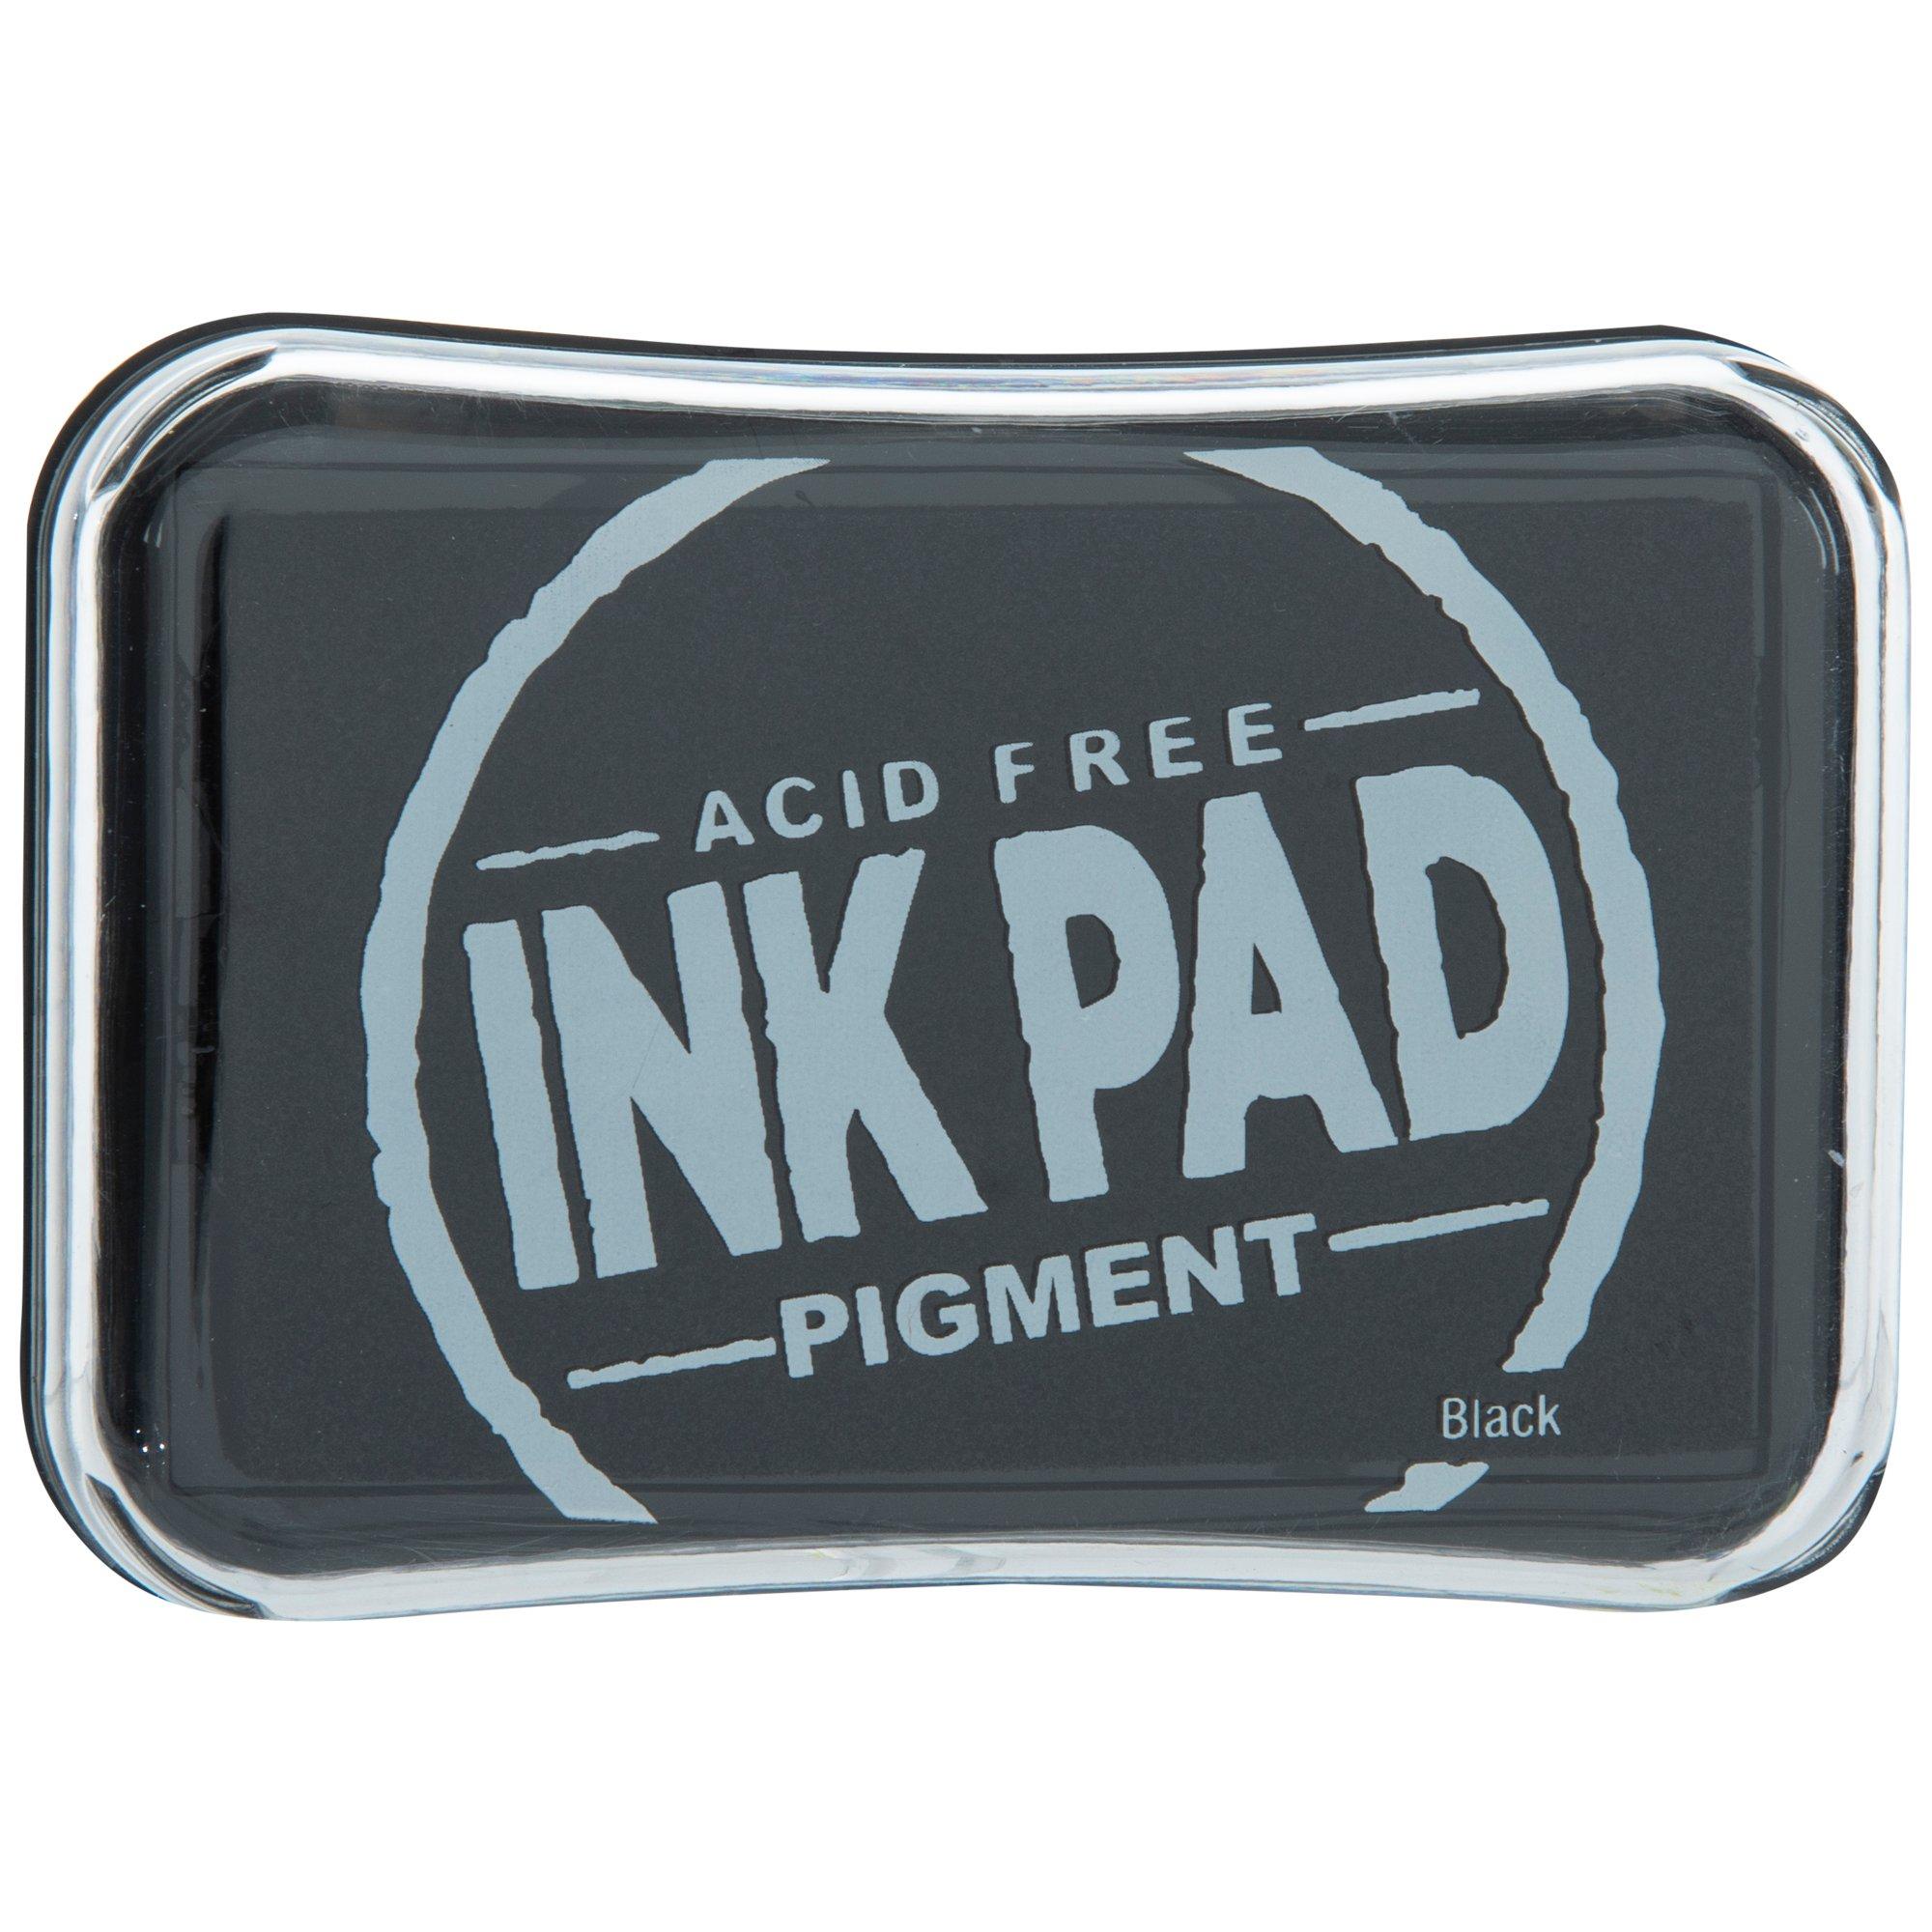 Black Pigment Ink Pads, Hobby Lobby